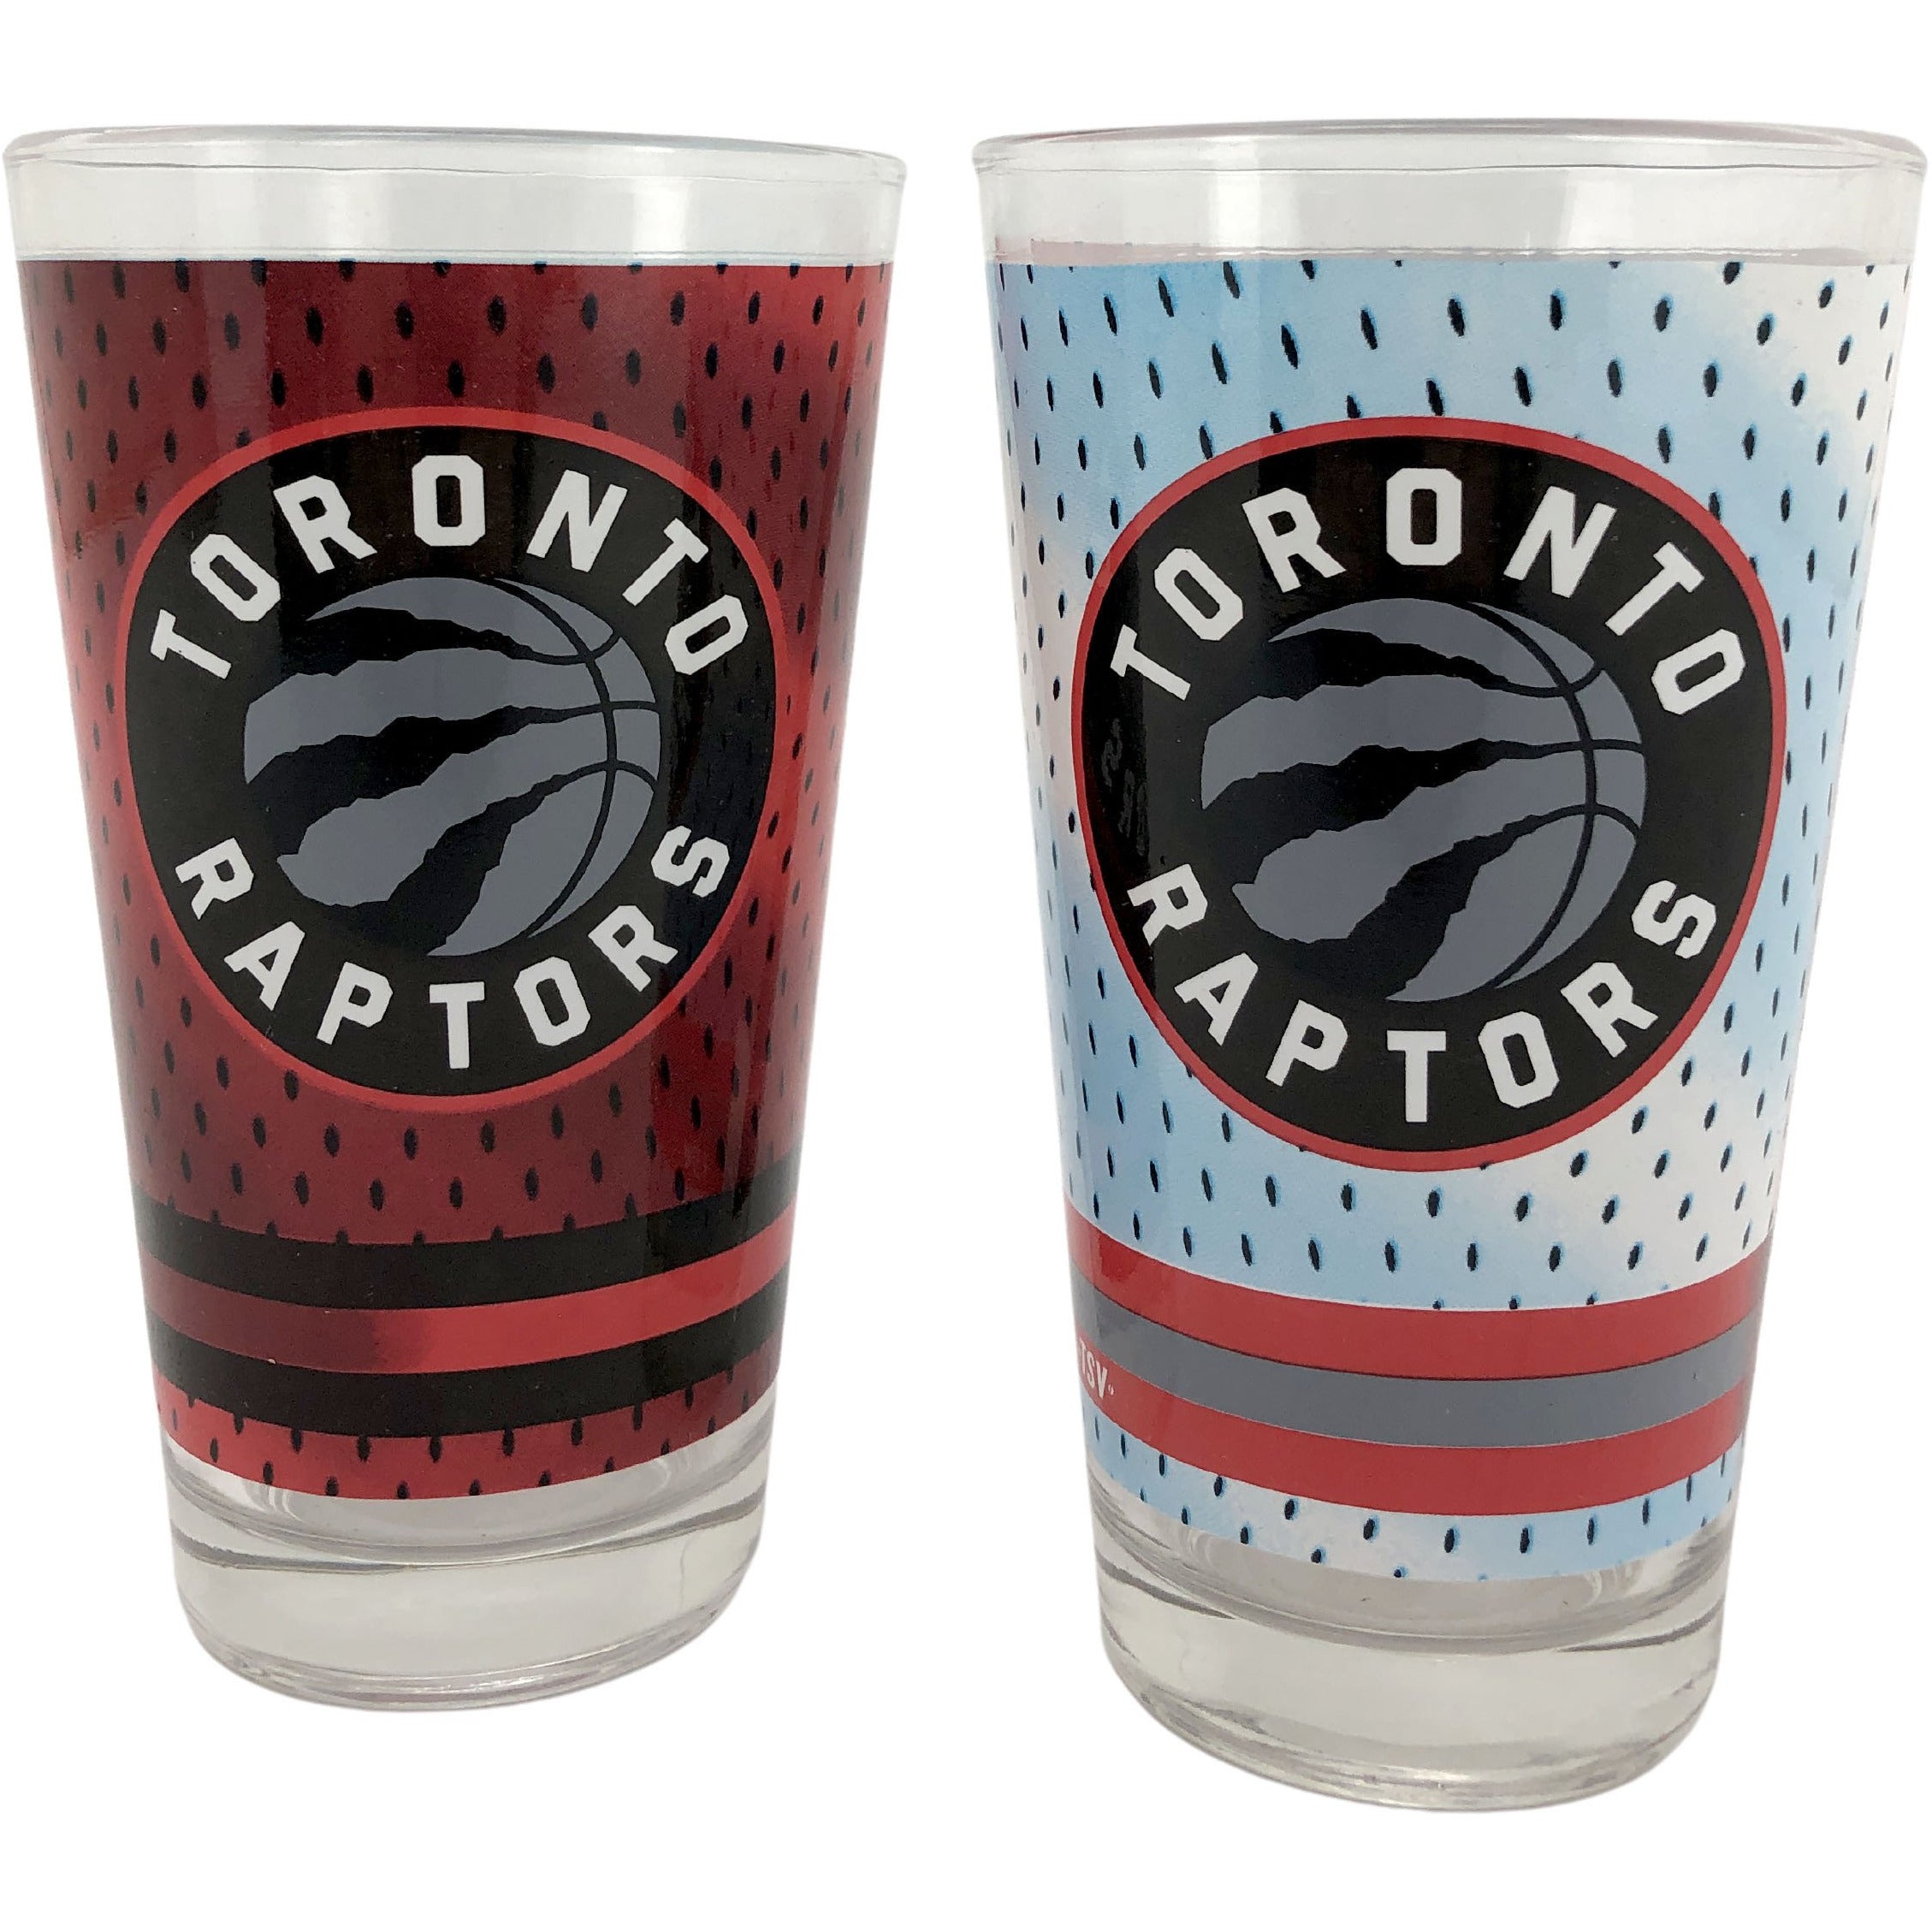 Toronto Raptors Matching Glass Tumbler Set in a 2 Pack